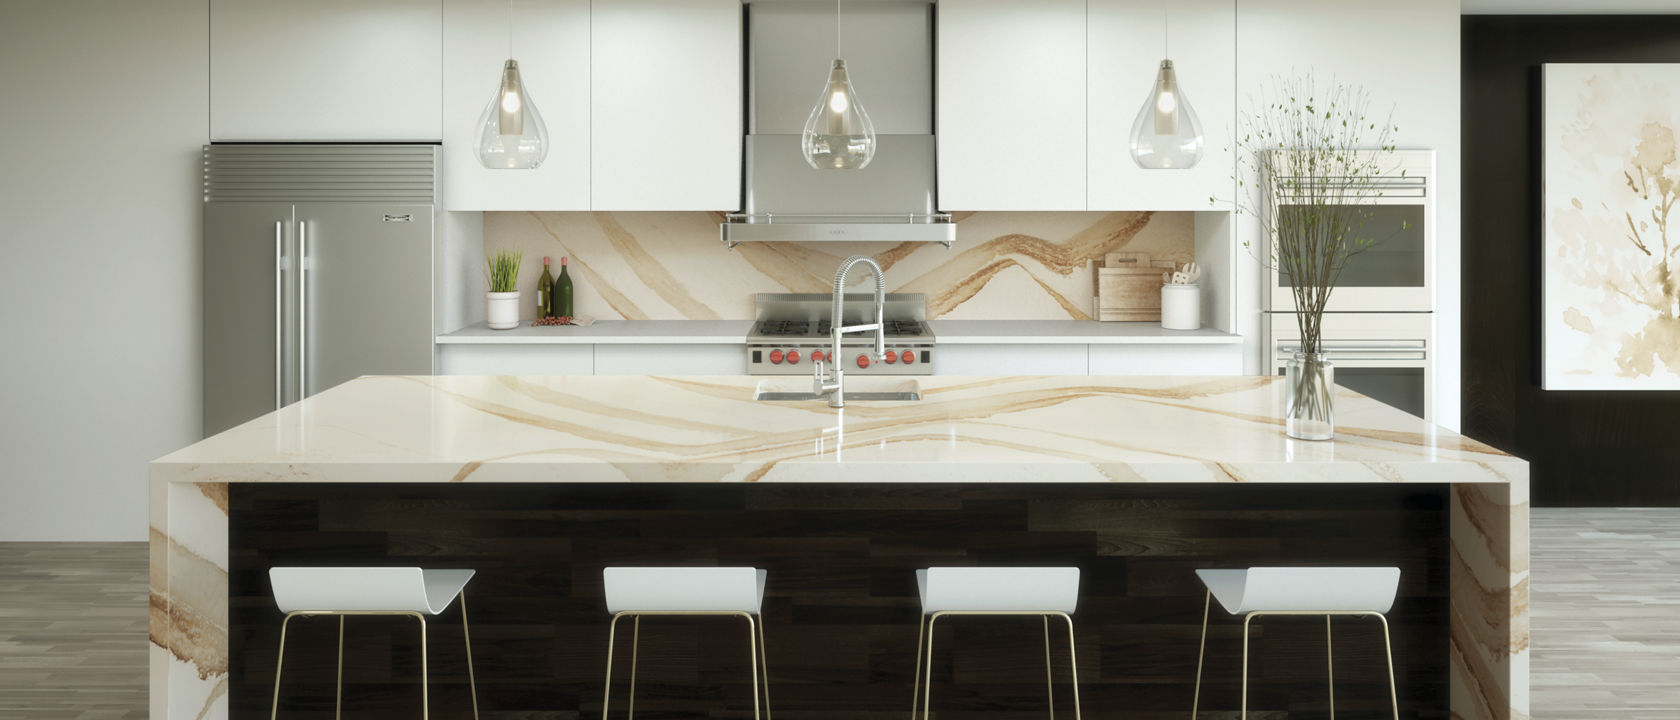 A modern kitchen with white cabinets and Brittanicca Gold Warm quartz countertops and backsplash